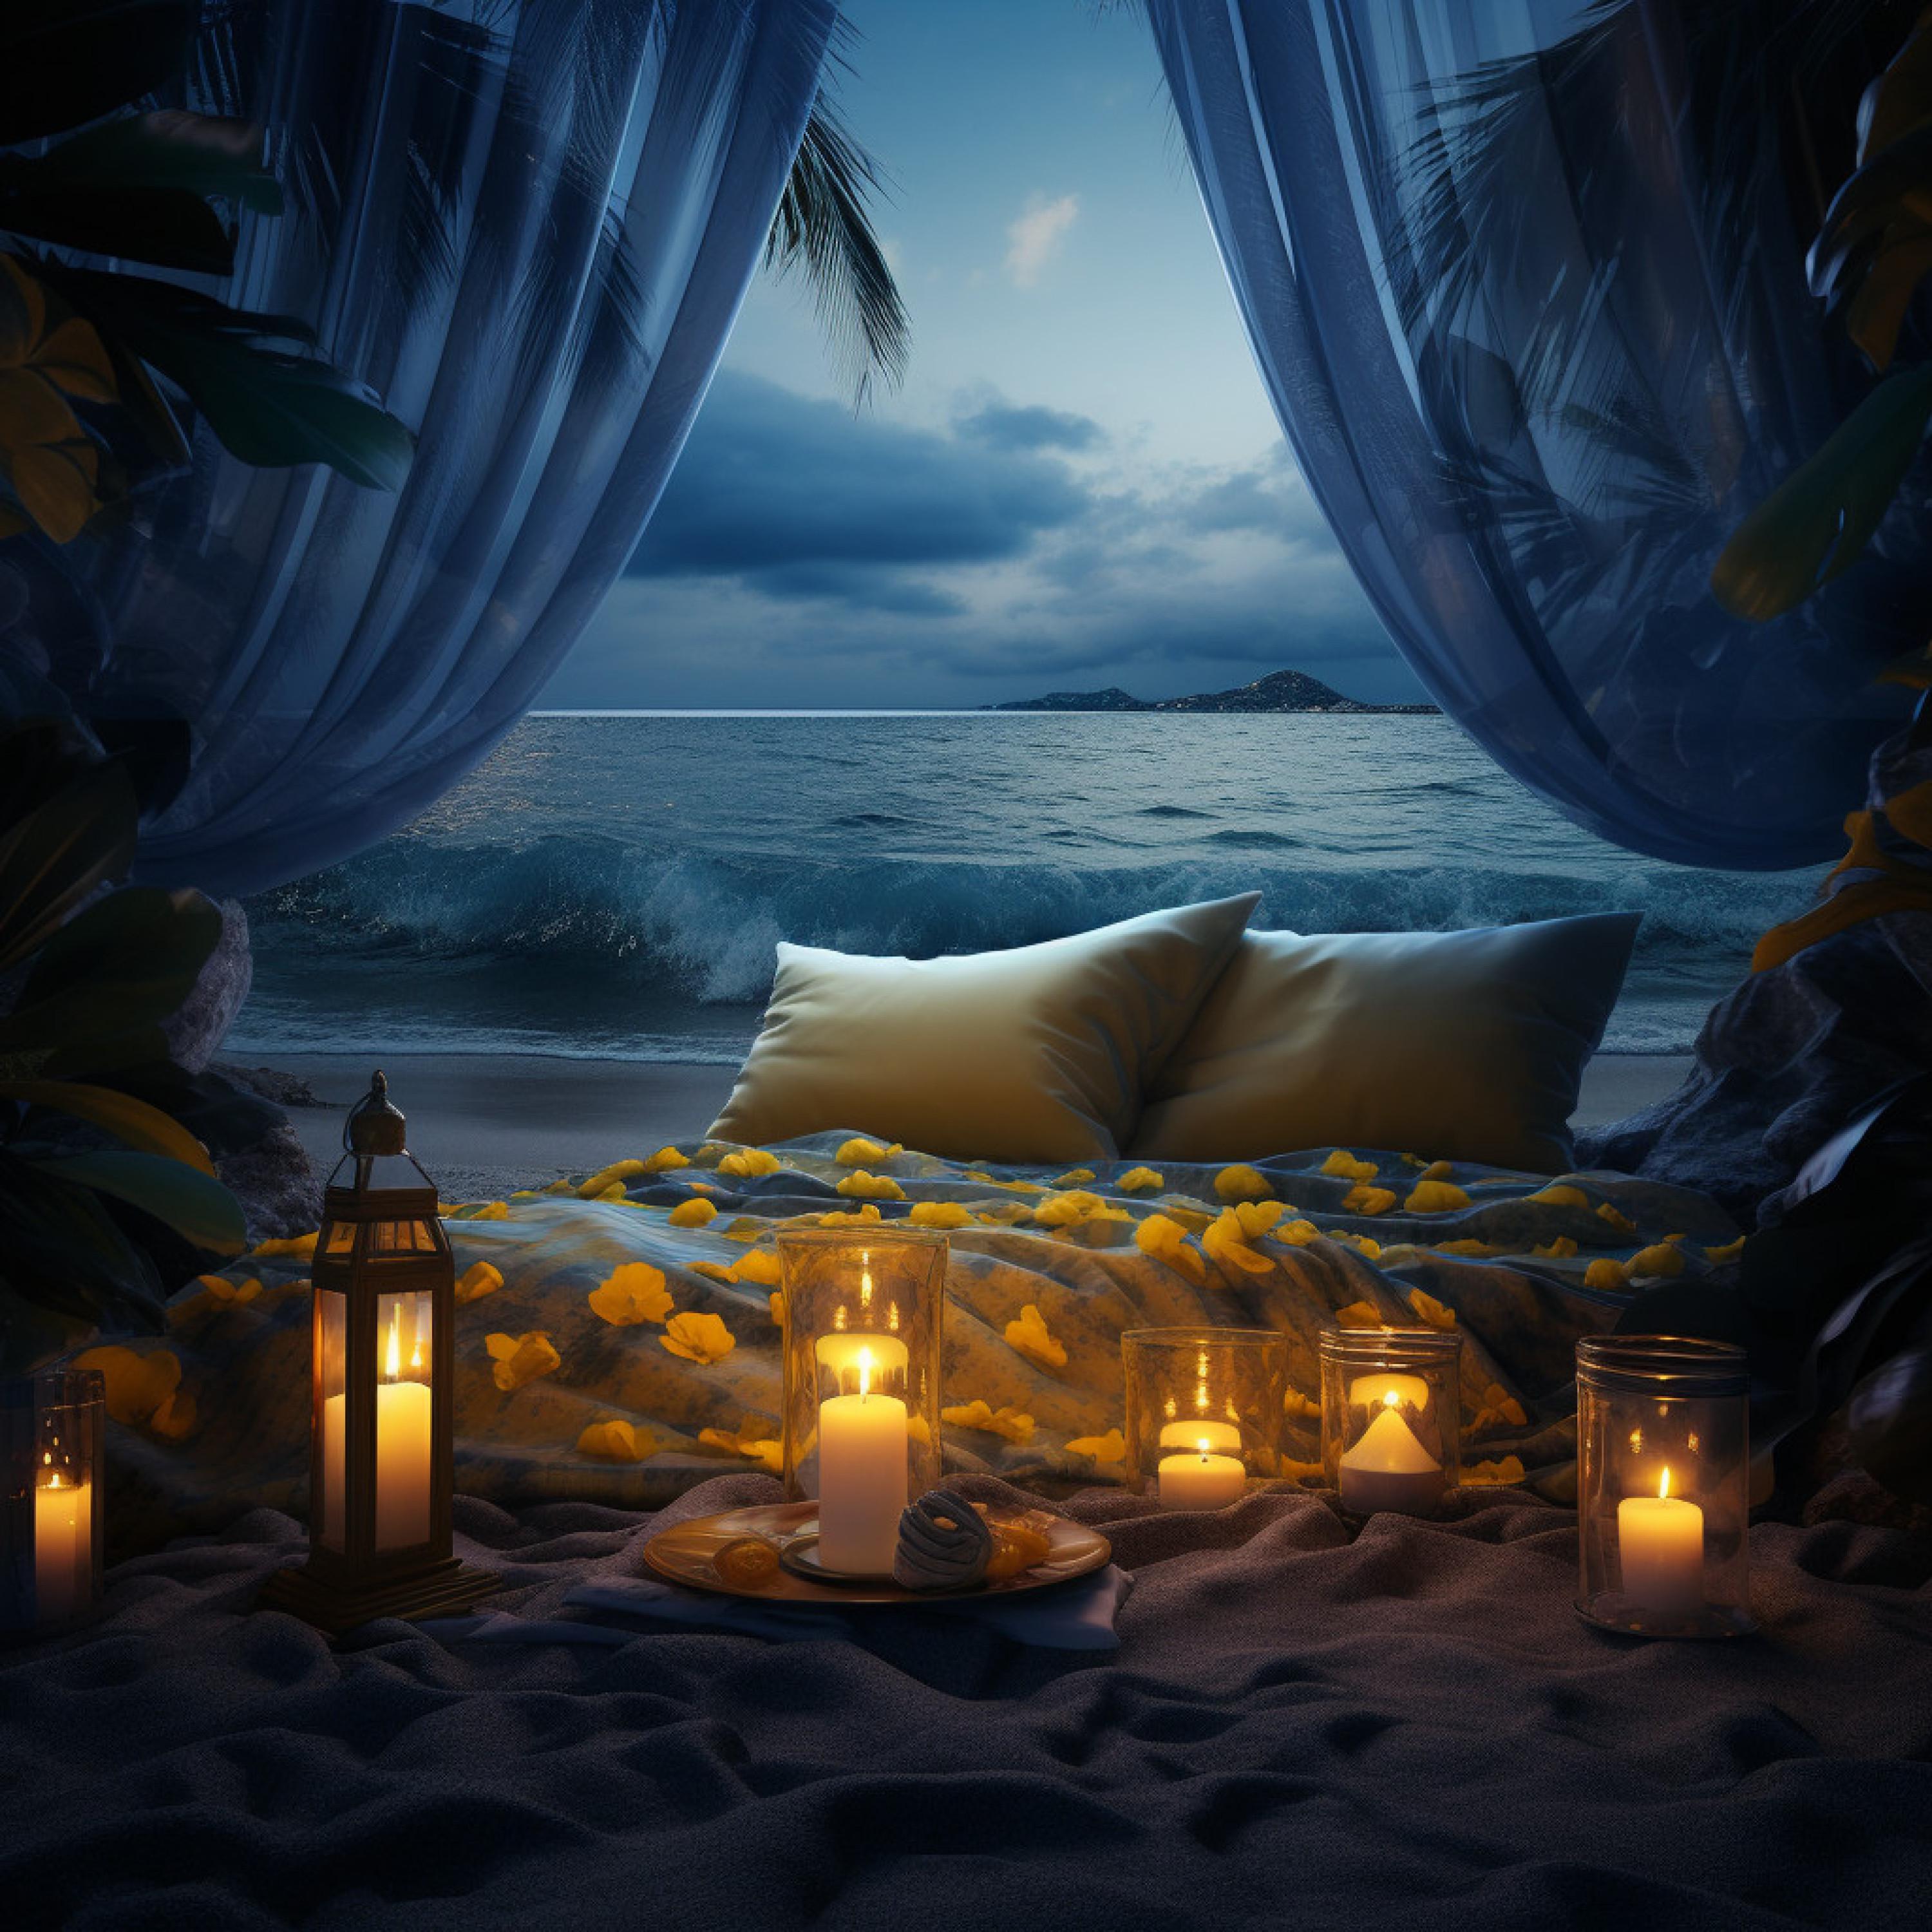 Nataural - Tranquil Sea Night Tune